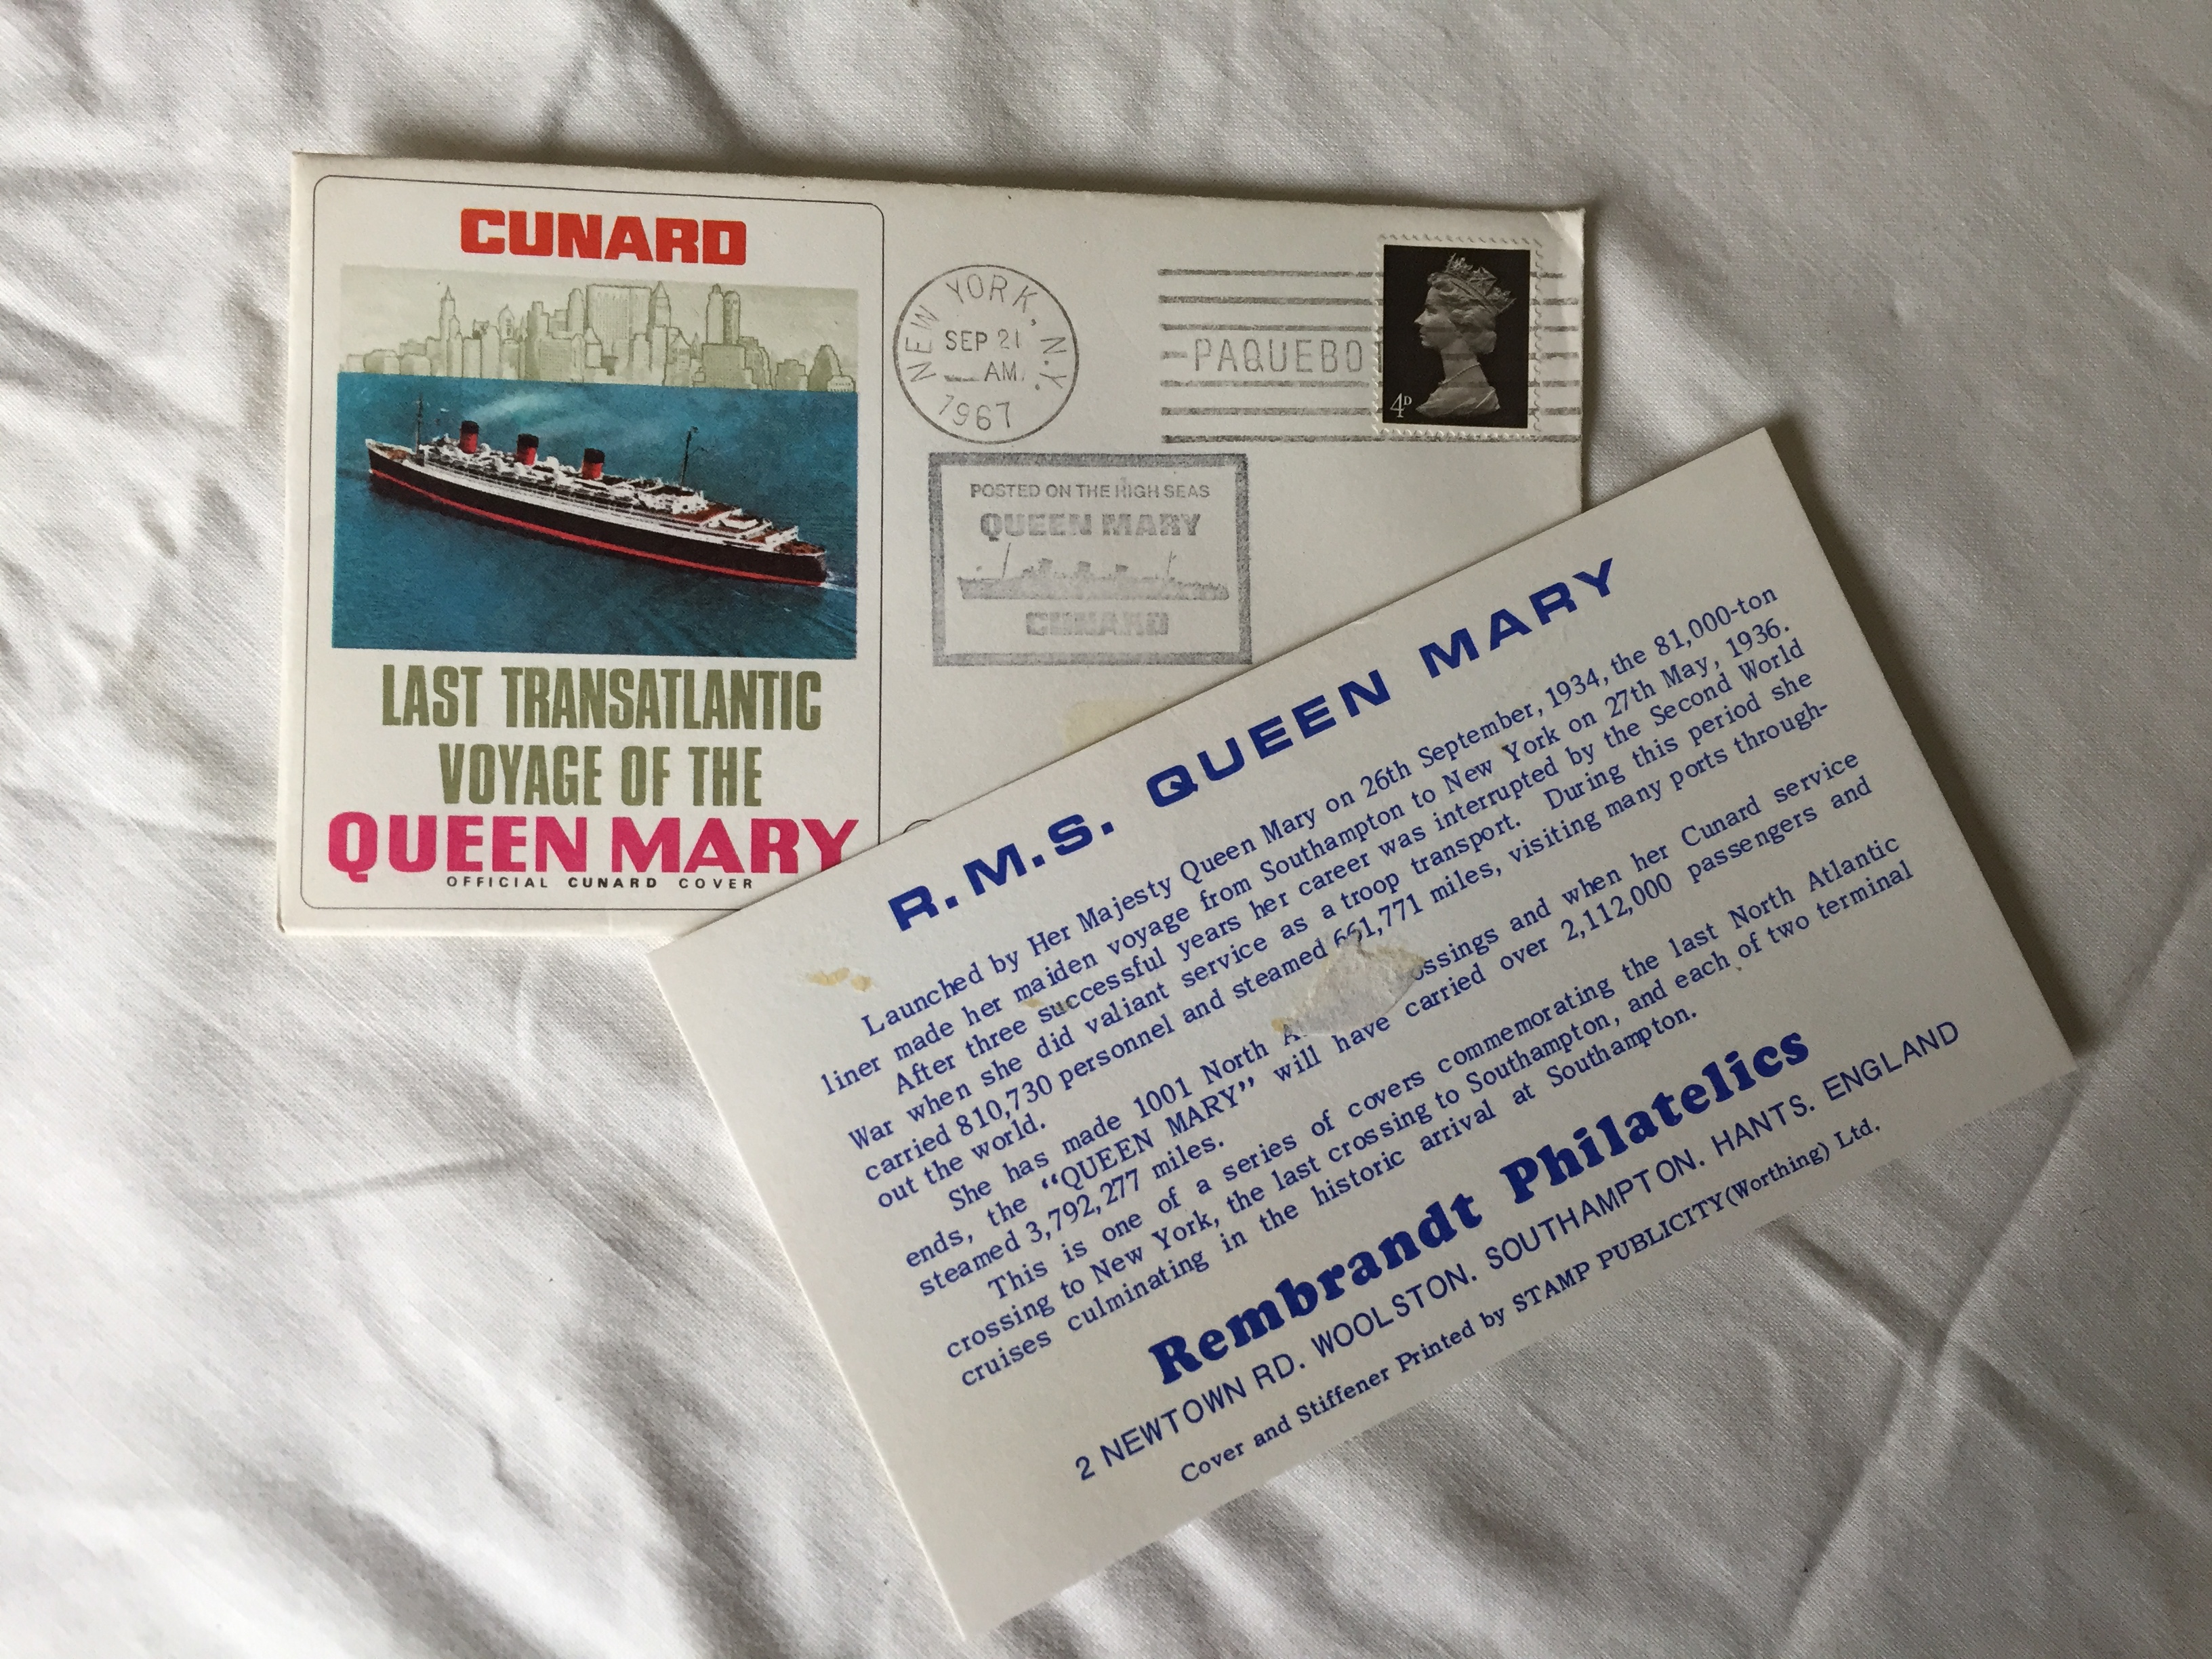 LAST TRANSATLANTIC VOYAGE QUEEN MARY POSTAL CARD DATED 1967